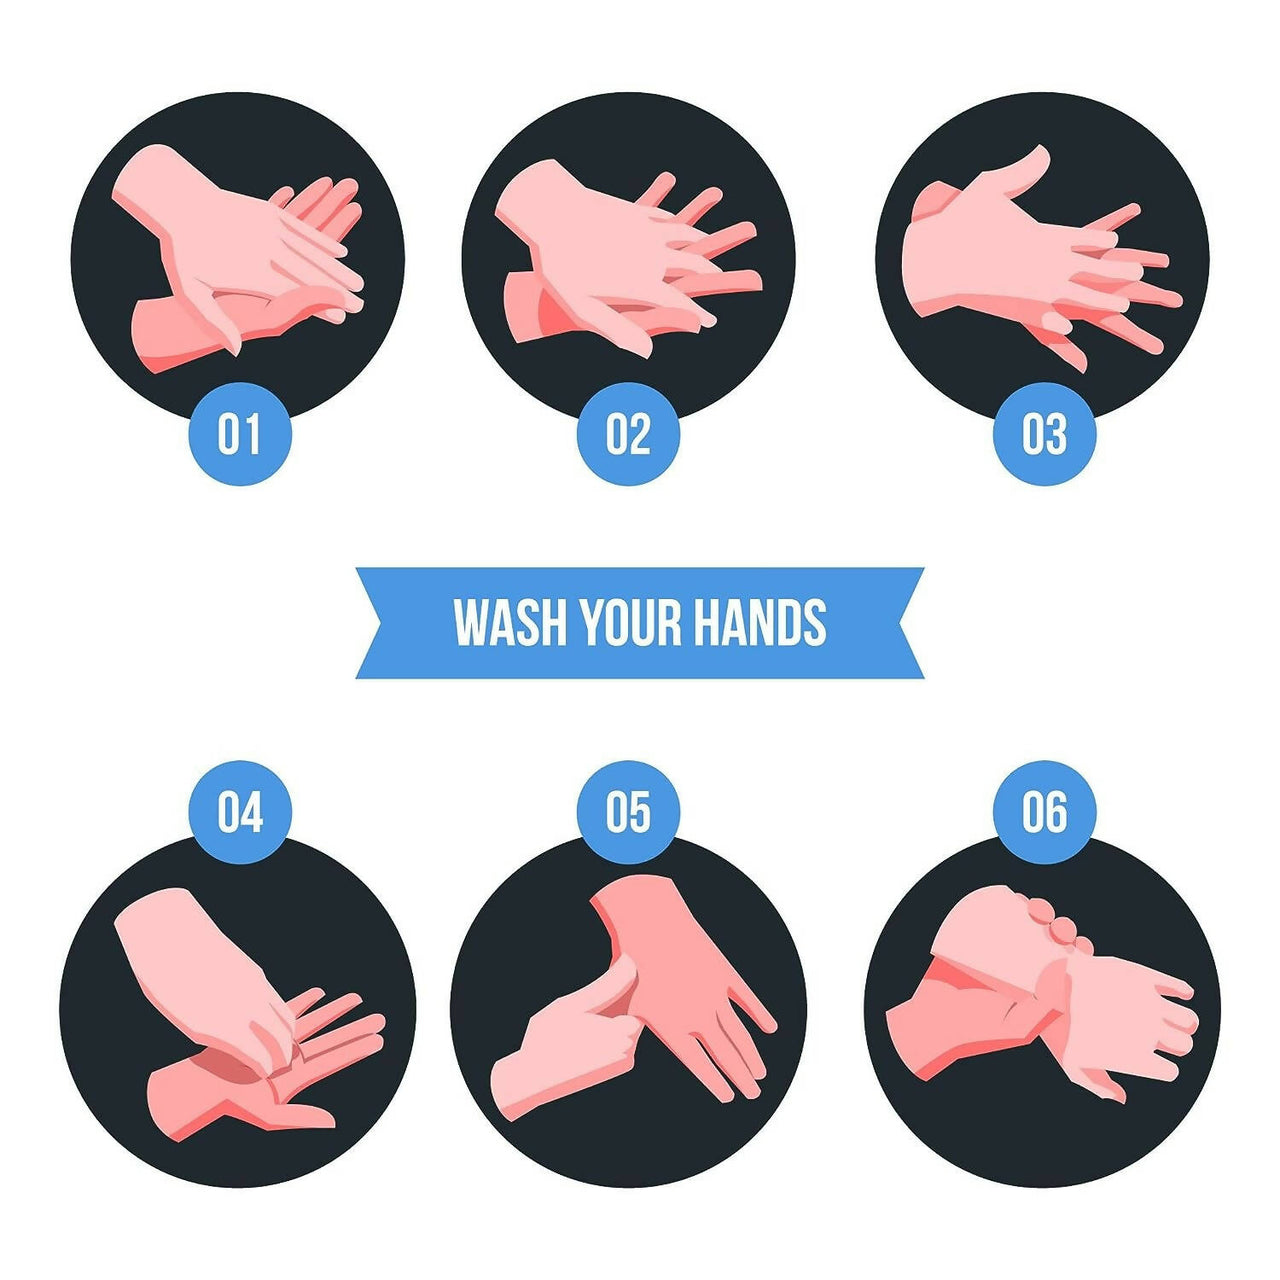 Babyorgano Non Alcoholic Foam Based Waterless Hand Wash for Kids - Distacart